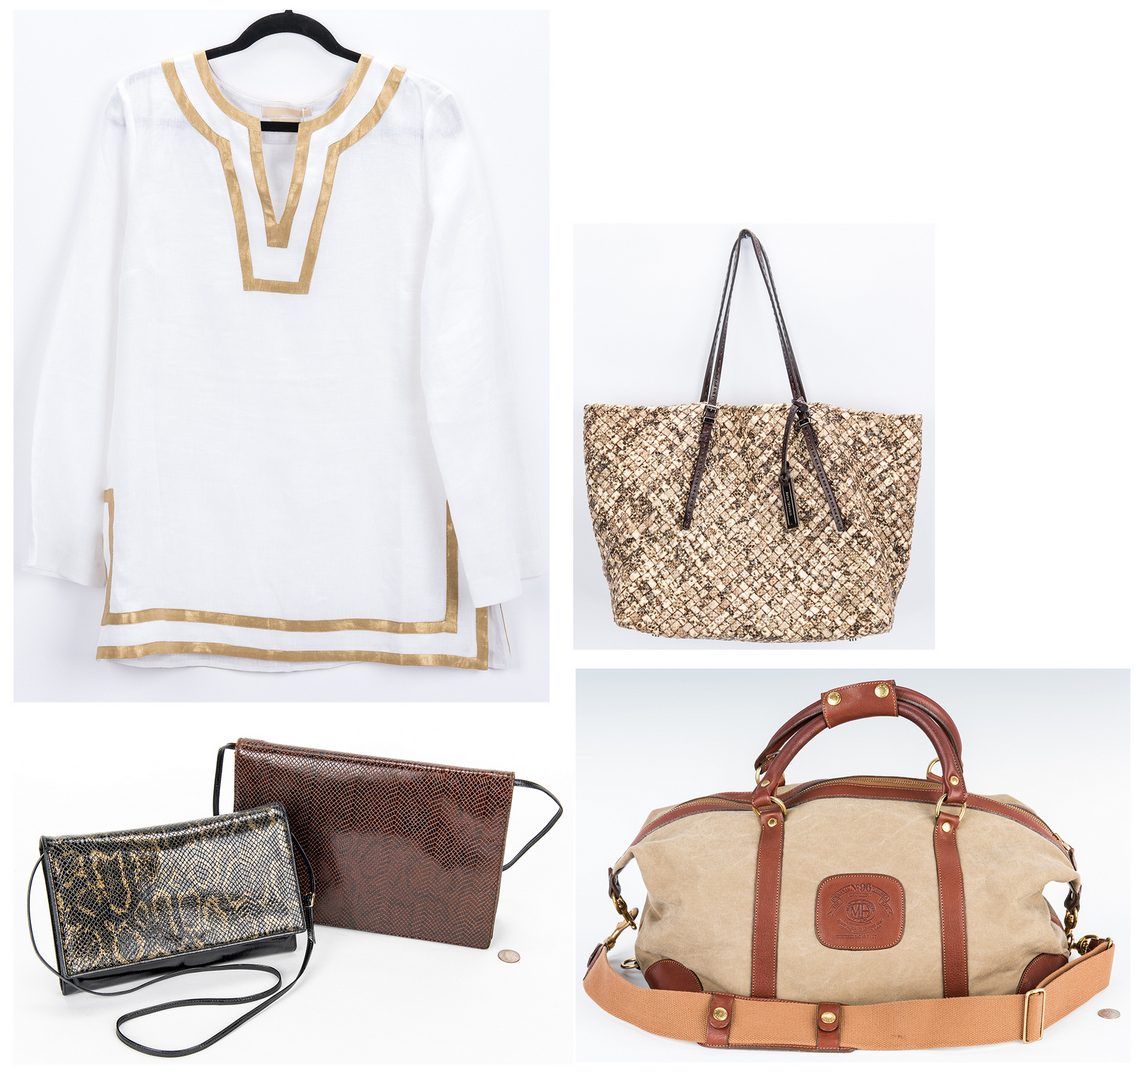 Lot 354: 5 Fashion Items, incl. Fendi, Michael Kors, Ghurka Duffel